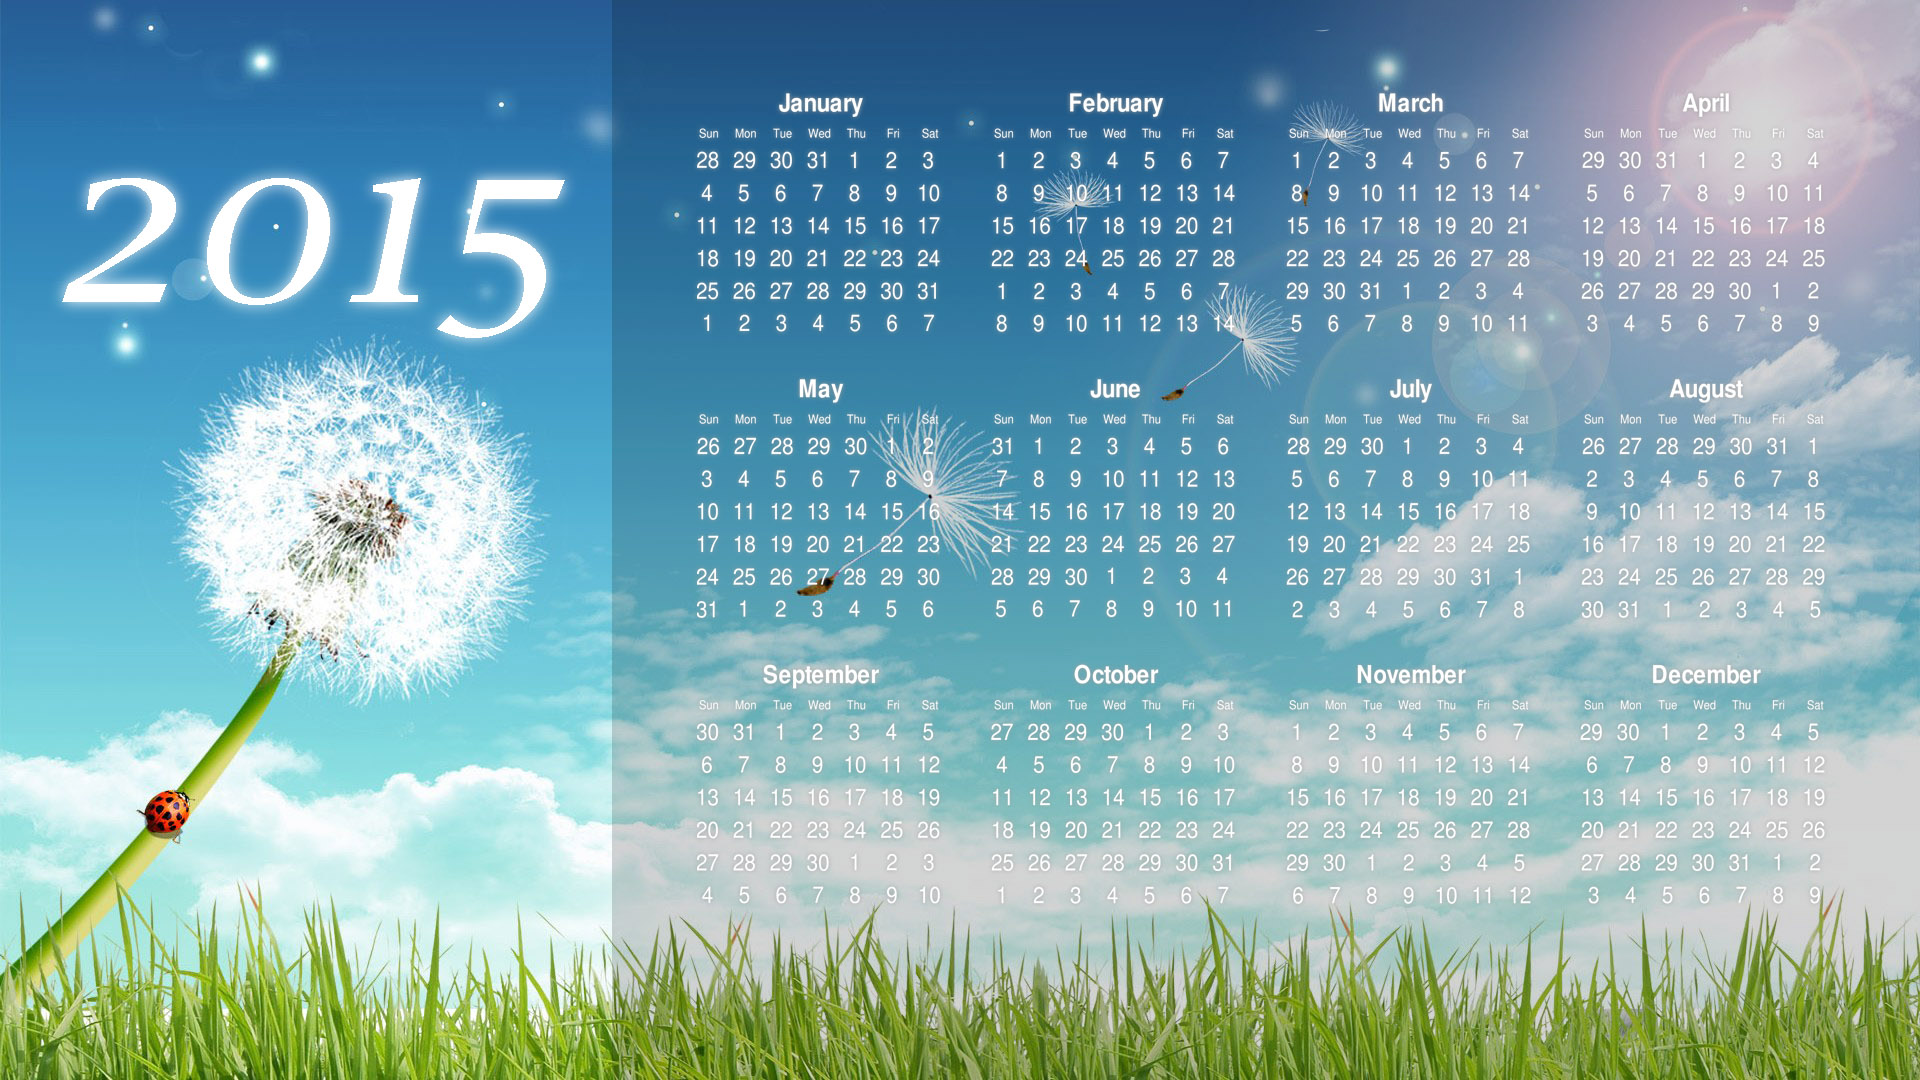 2015 Calendar HD Wallpapers Download Free Desktop Wallpaper Images